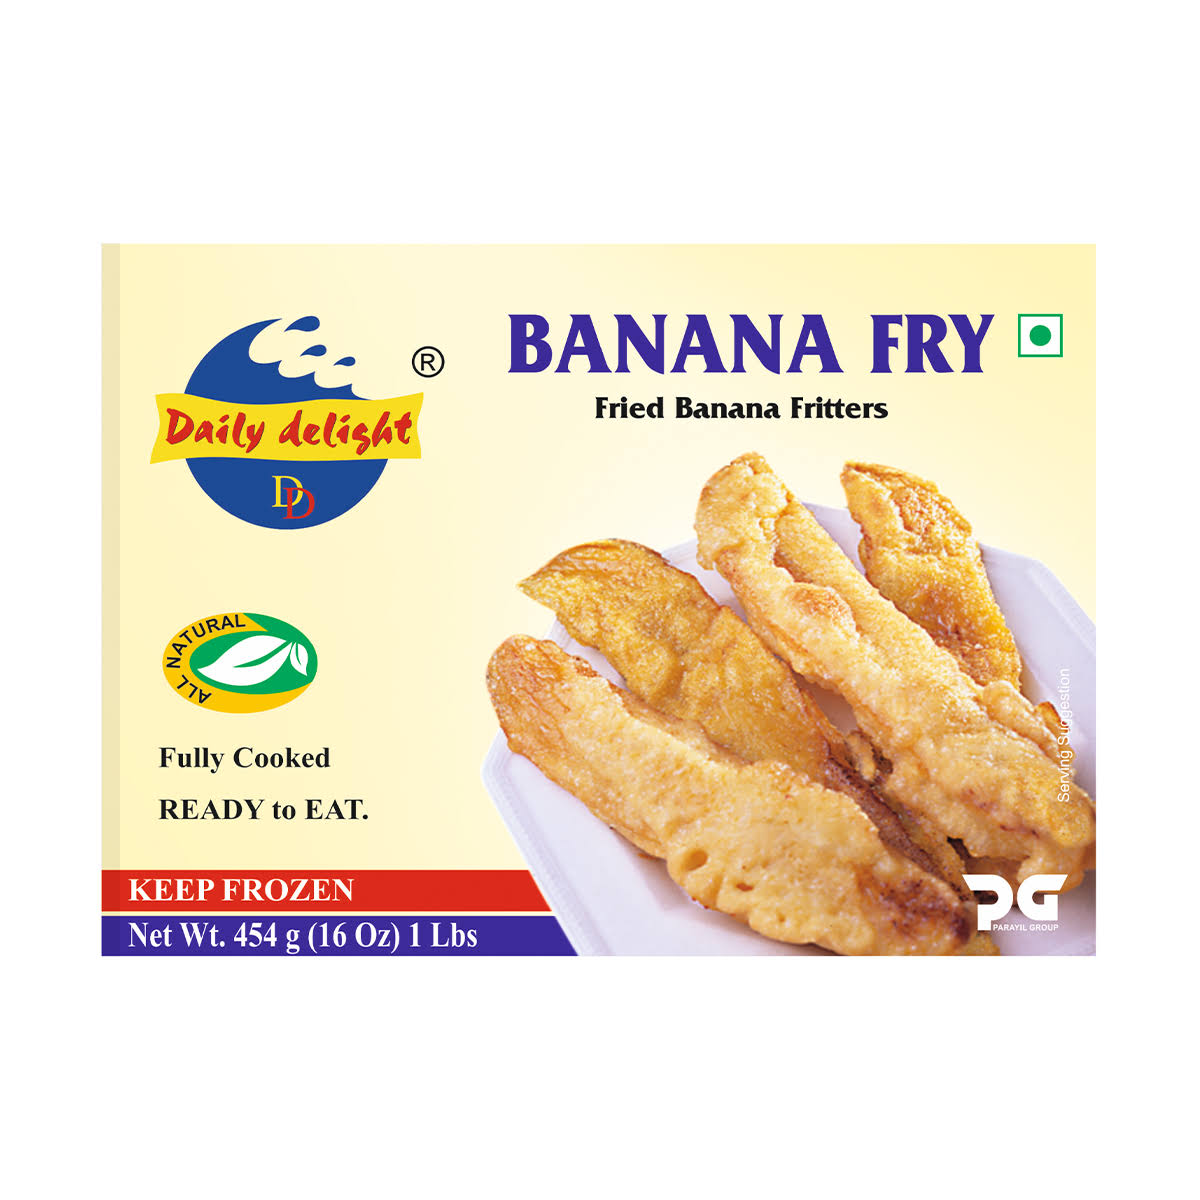 Daily Delights Banana Fry - 16 oz